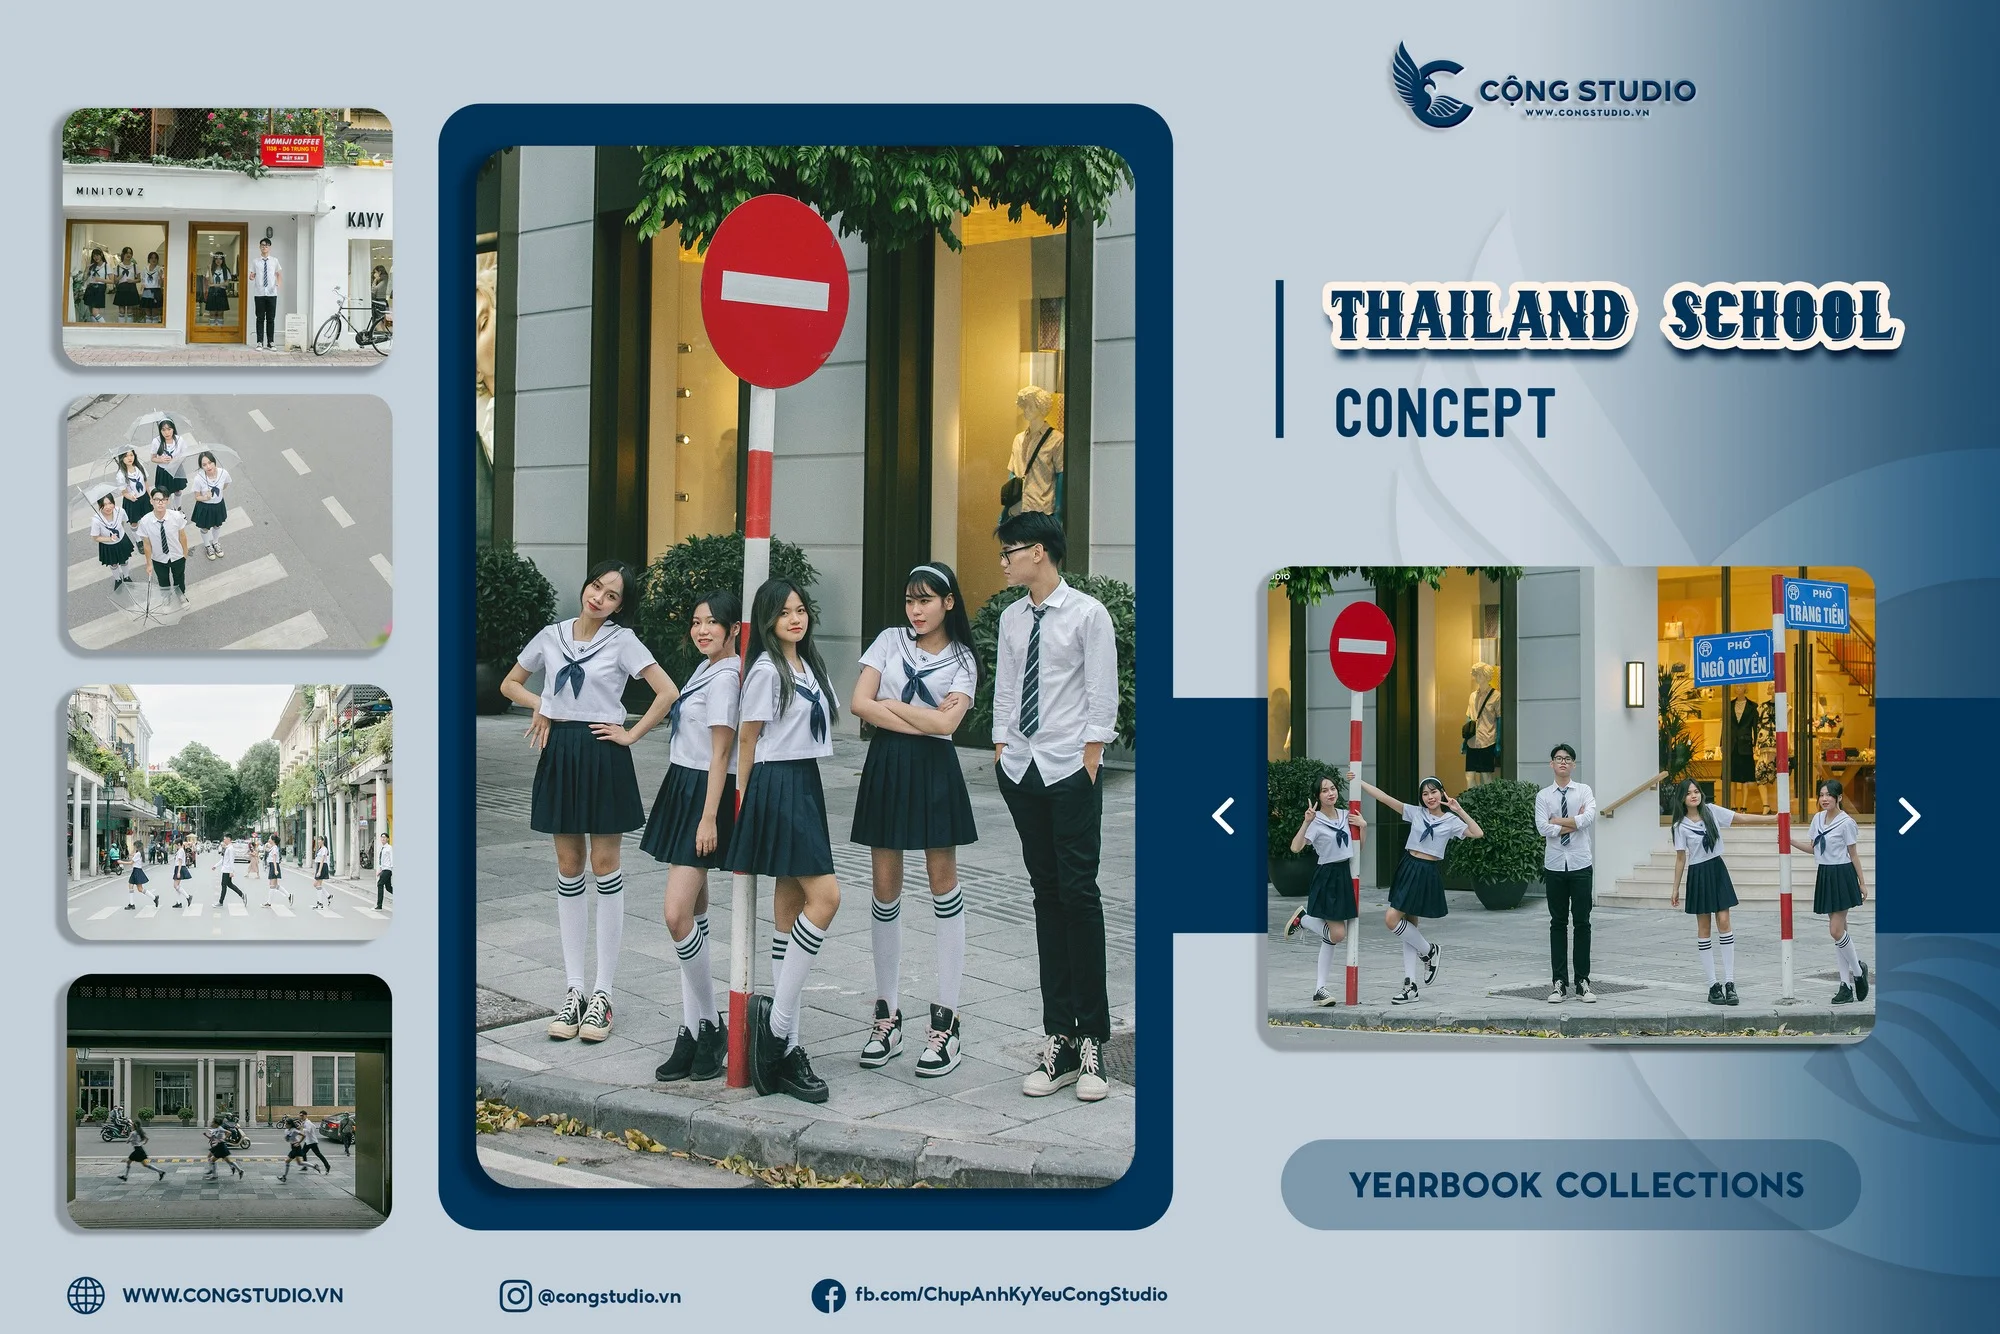 concept chụp ảnh kỷ yếu Thailand school 2 concept